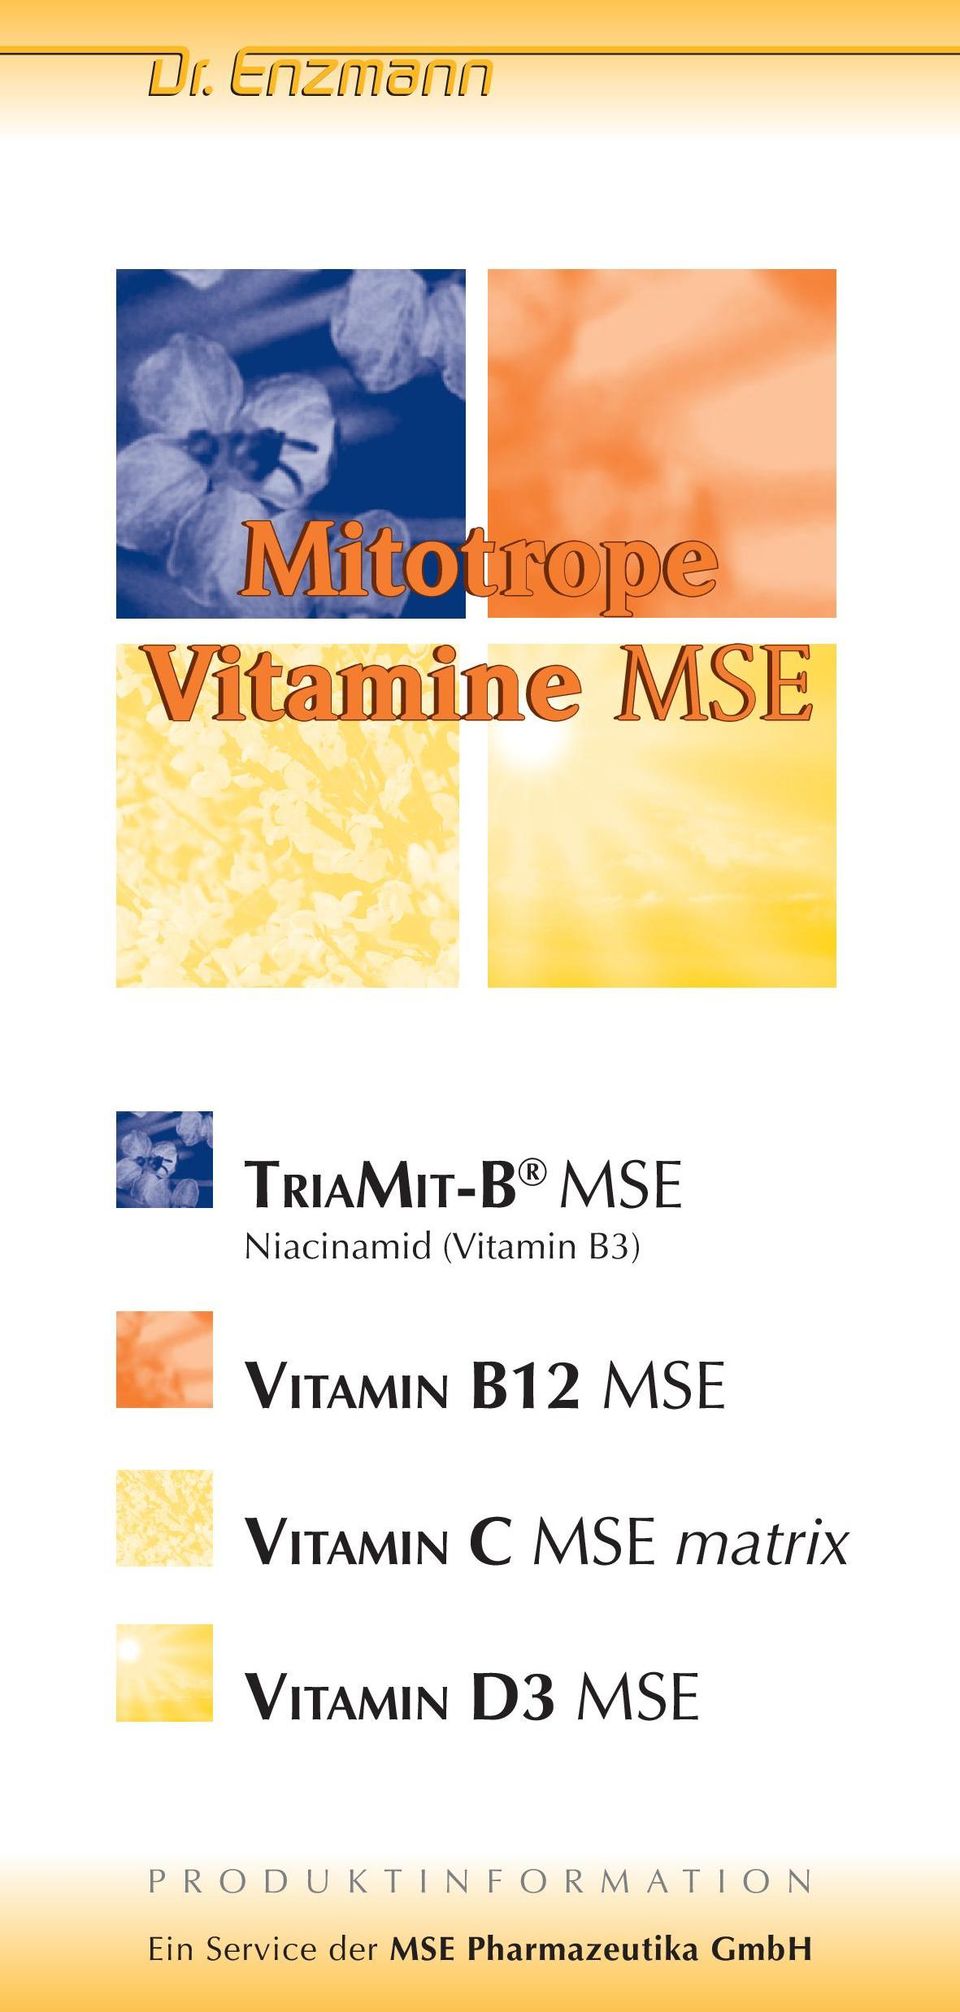 Vitamin C MSE matrix Vitamin D3 MSE